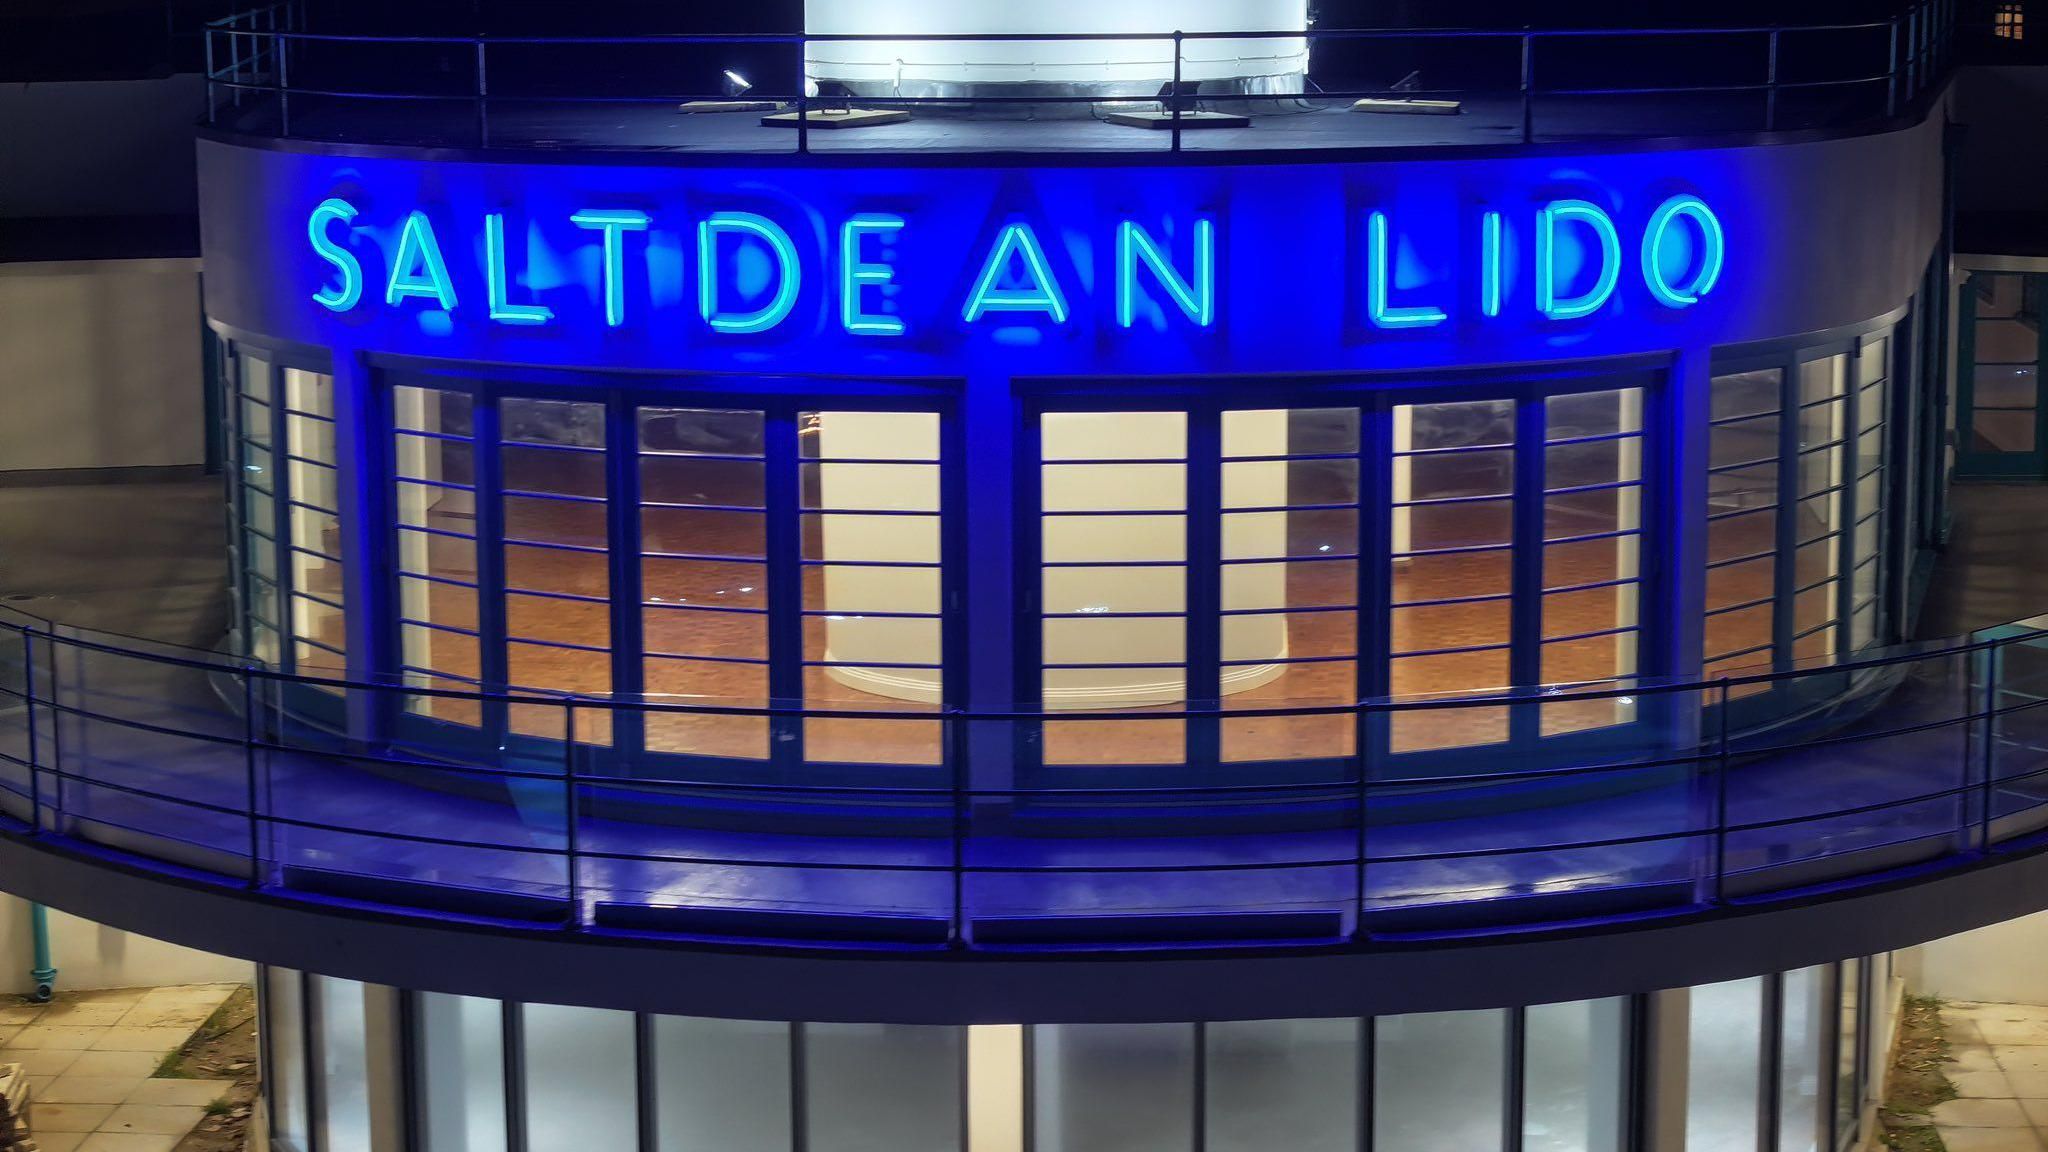 Blue neon sign which reads Saltdean Lido